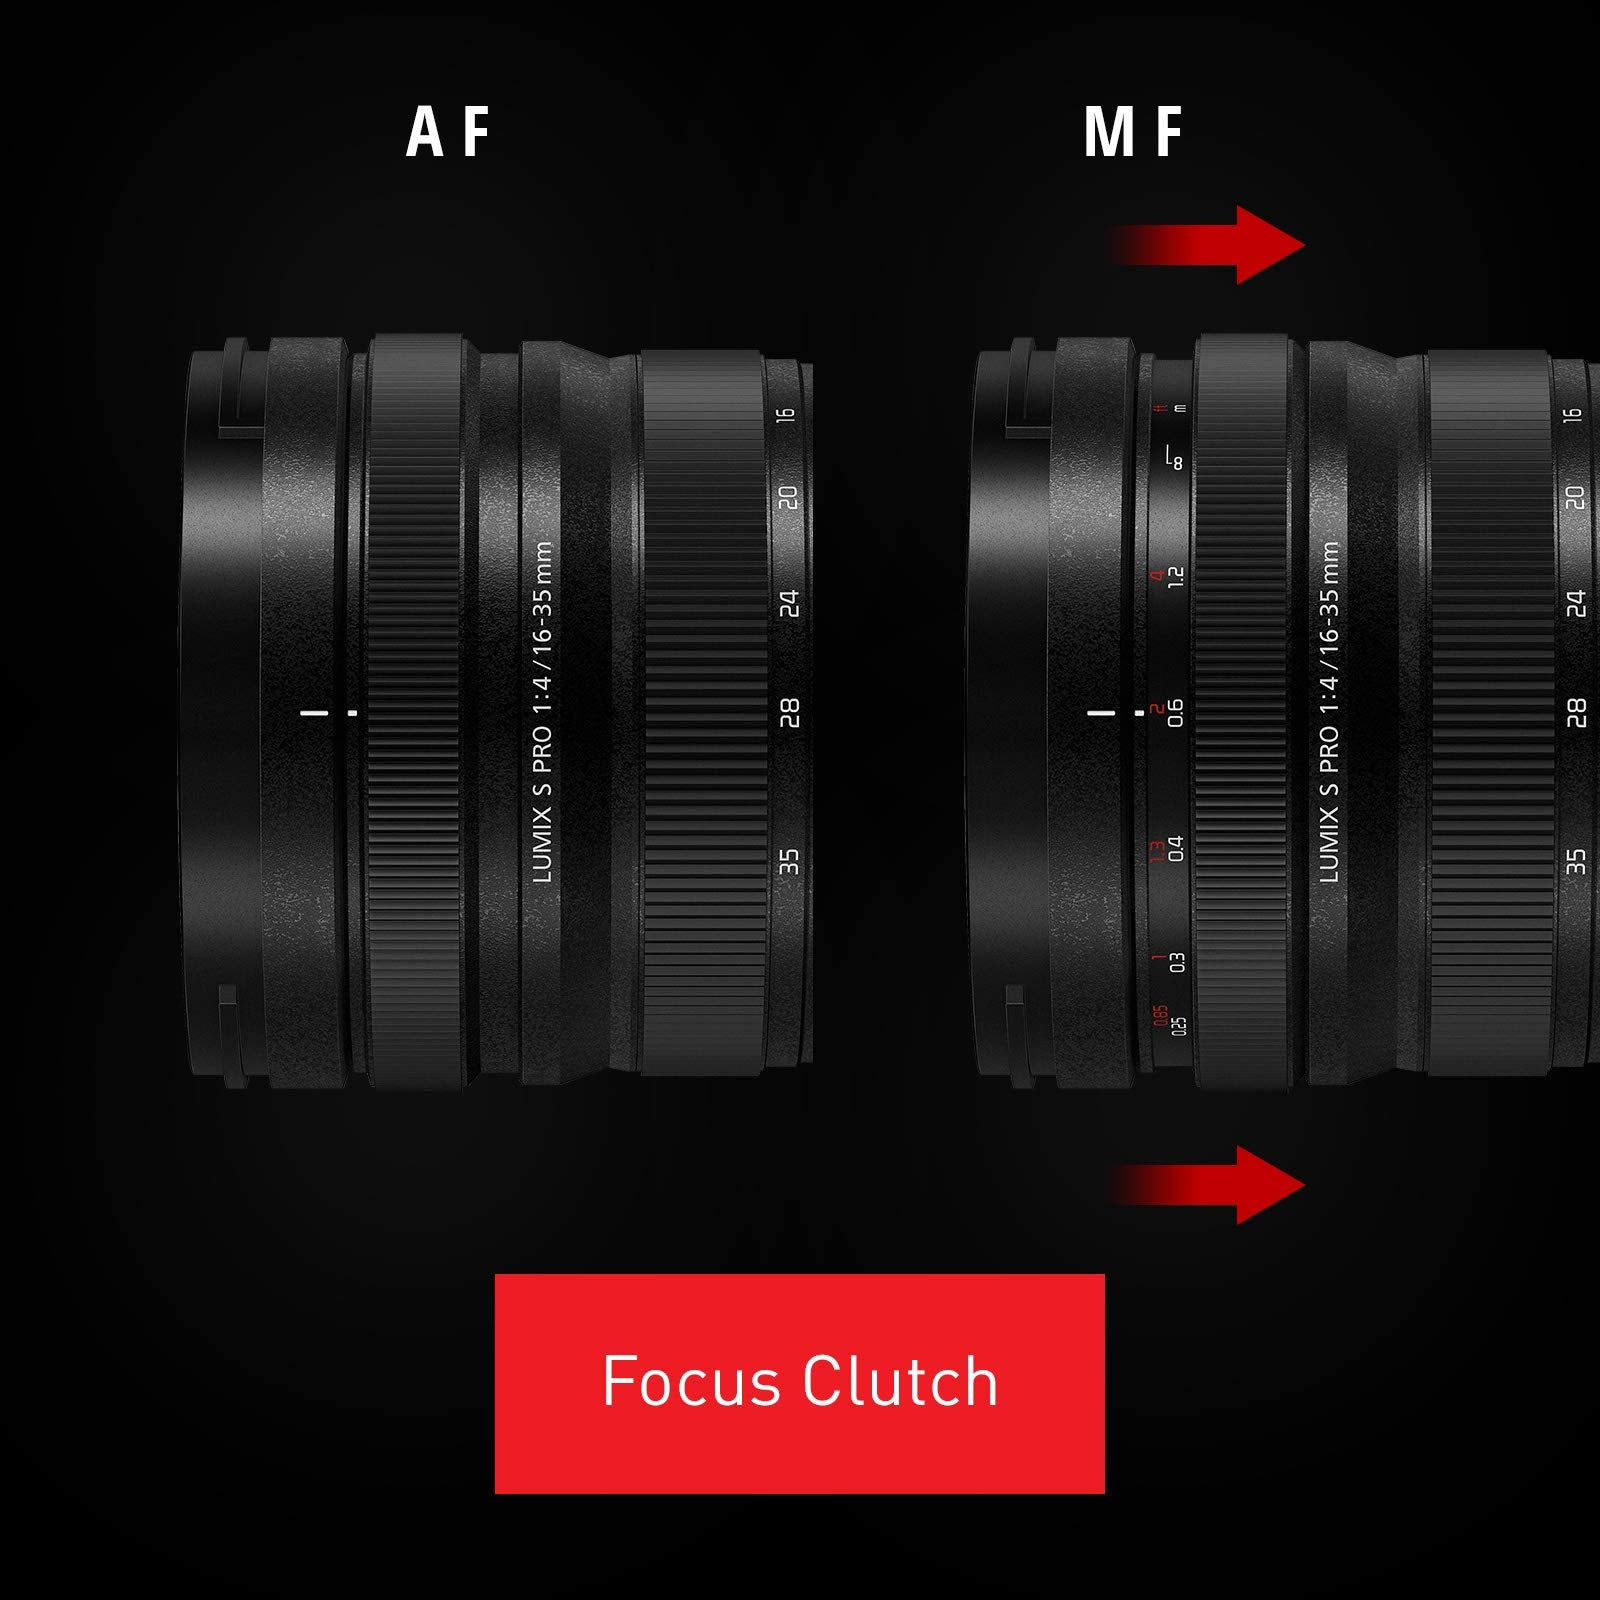 Panasonic Lumix S Pro 16-35mm F4 Wide Zoom Lens, Full-Frame L Mount, S-R1635 (International Model)